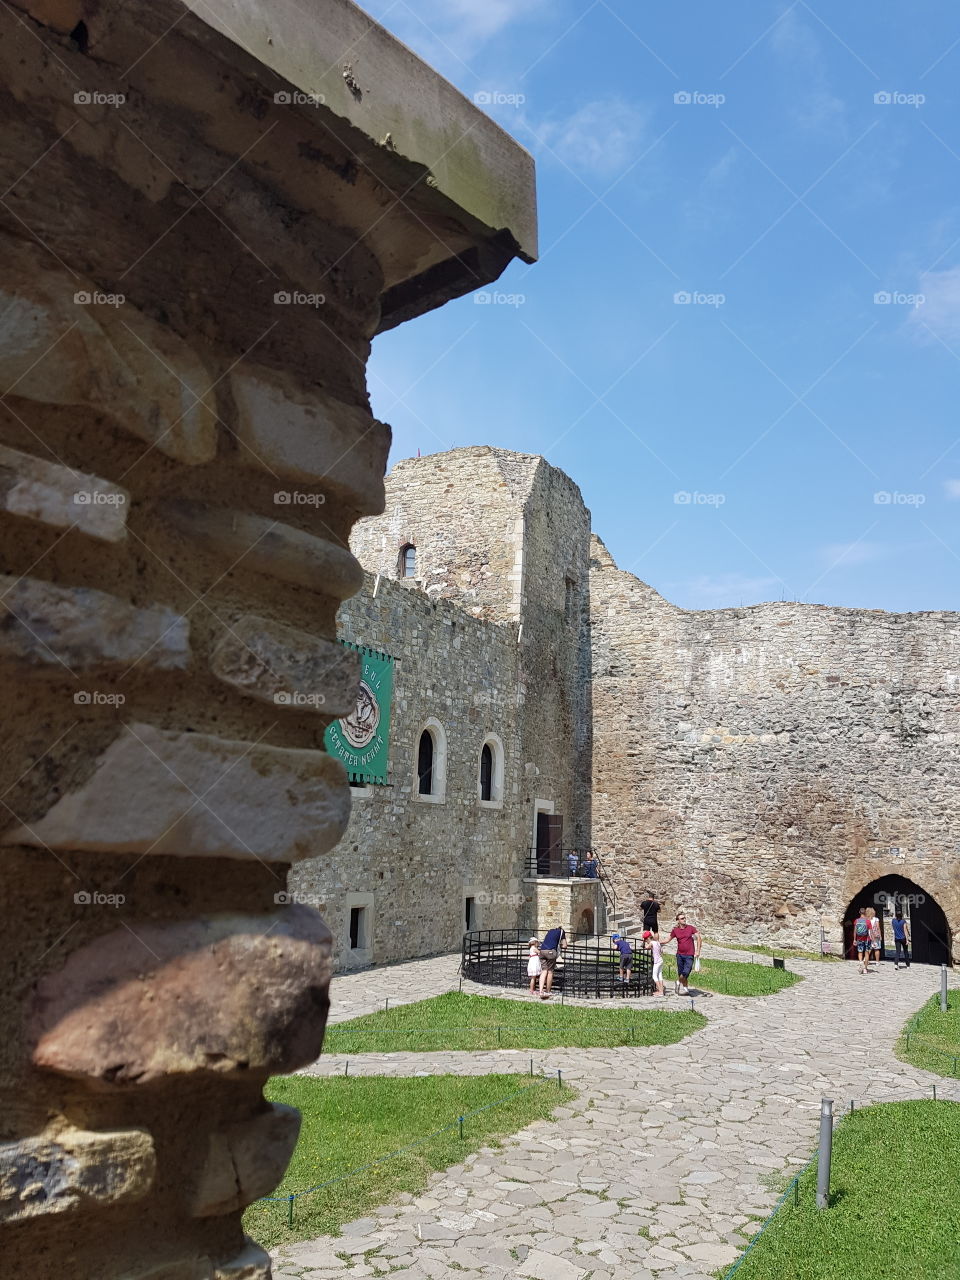 fortress interior - stone walls